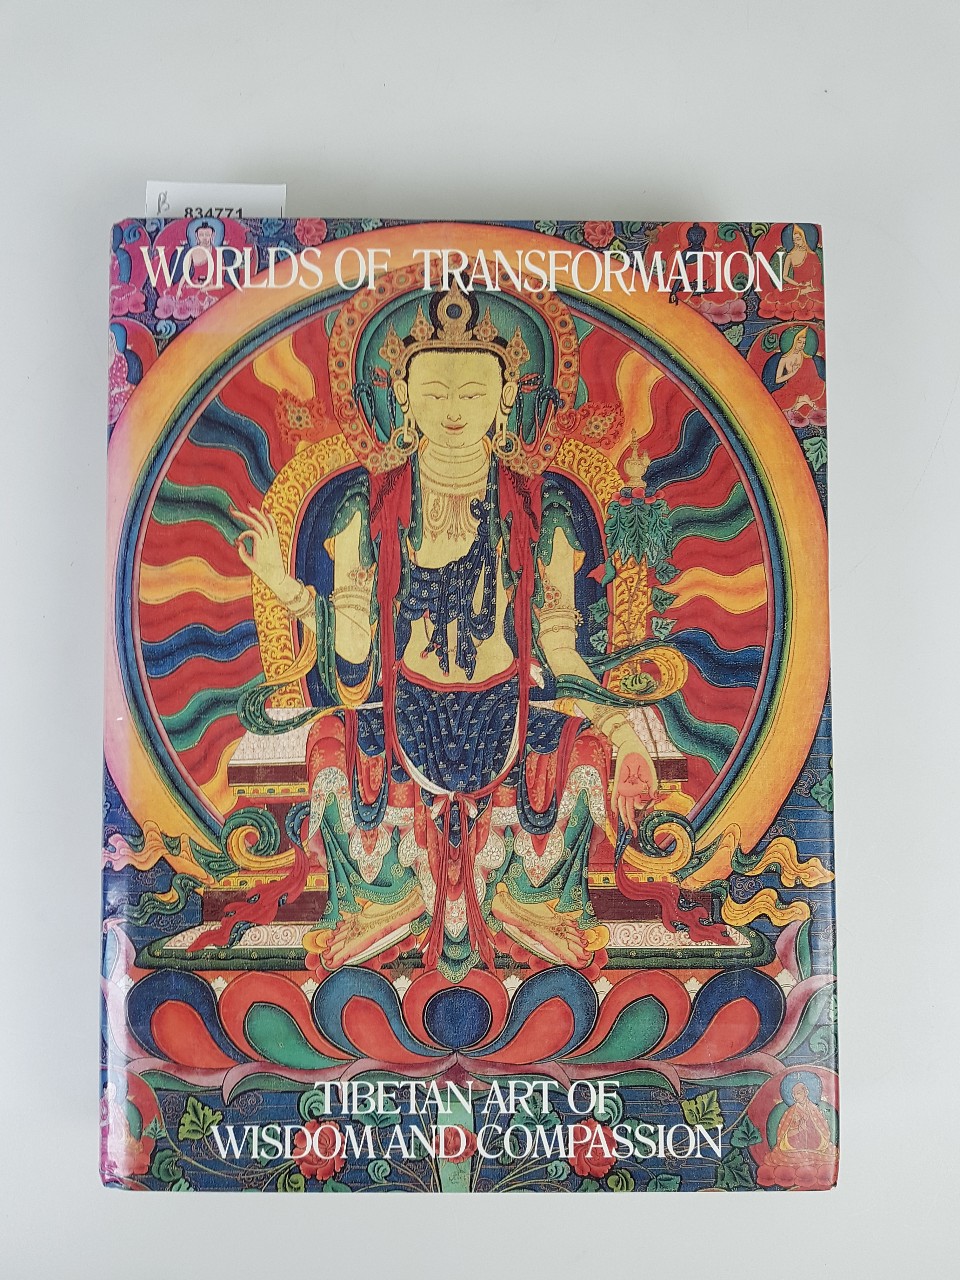 Rhie, Marylin M., Robert A.F. Thurman  Dalai Lama (Foreword) a. o.:  Worlds of Transformation: Tibetan Art of Wisdom and Compassion. 